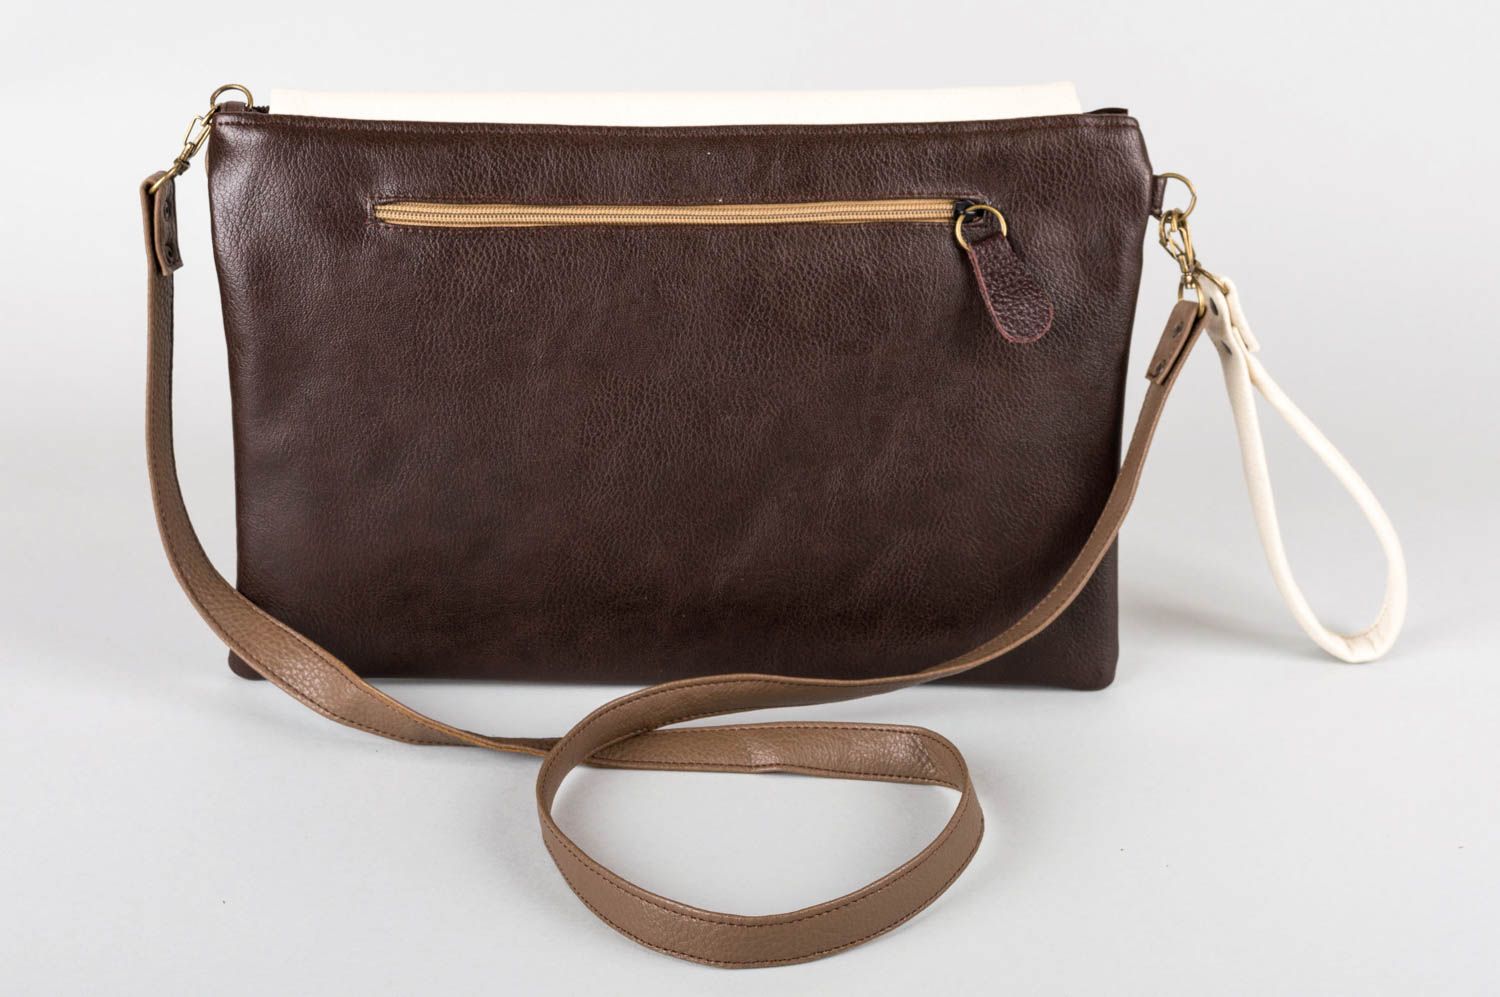 Unusual stylish handmade faux leather shoulder bag fashion accessories gift idea photo 2